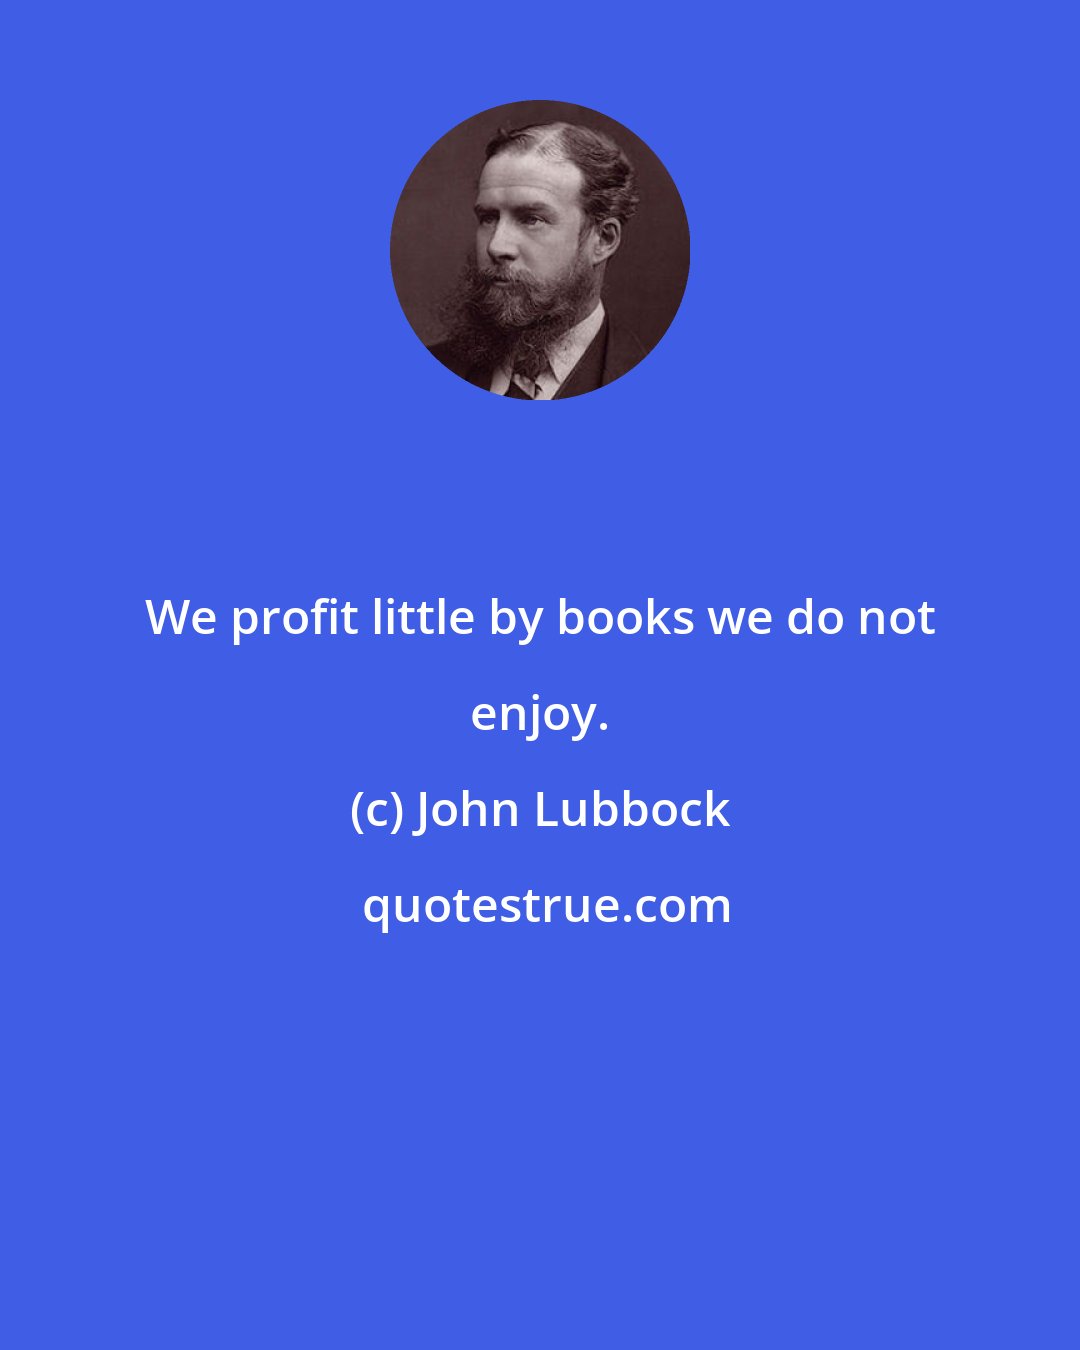 John Lubbock: We profit little by books we do not enjoy.